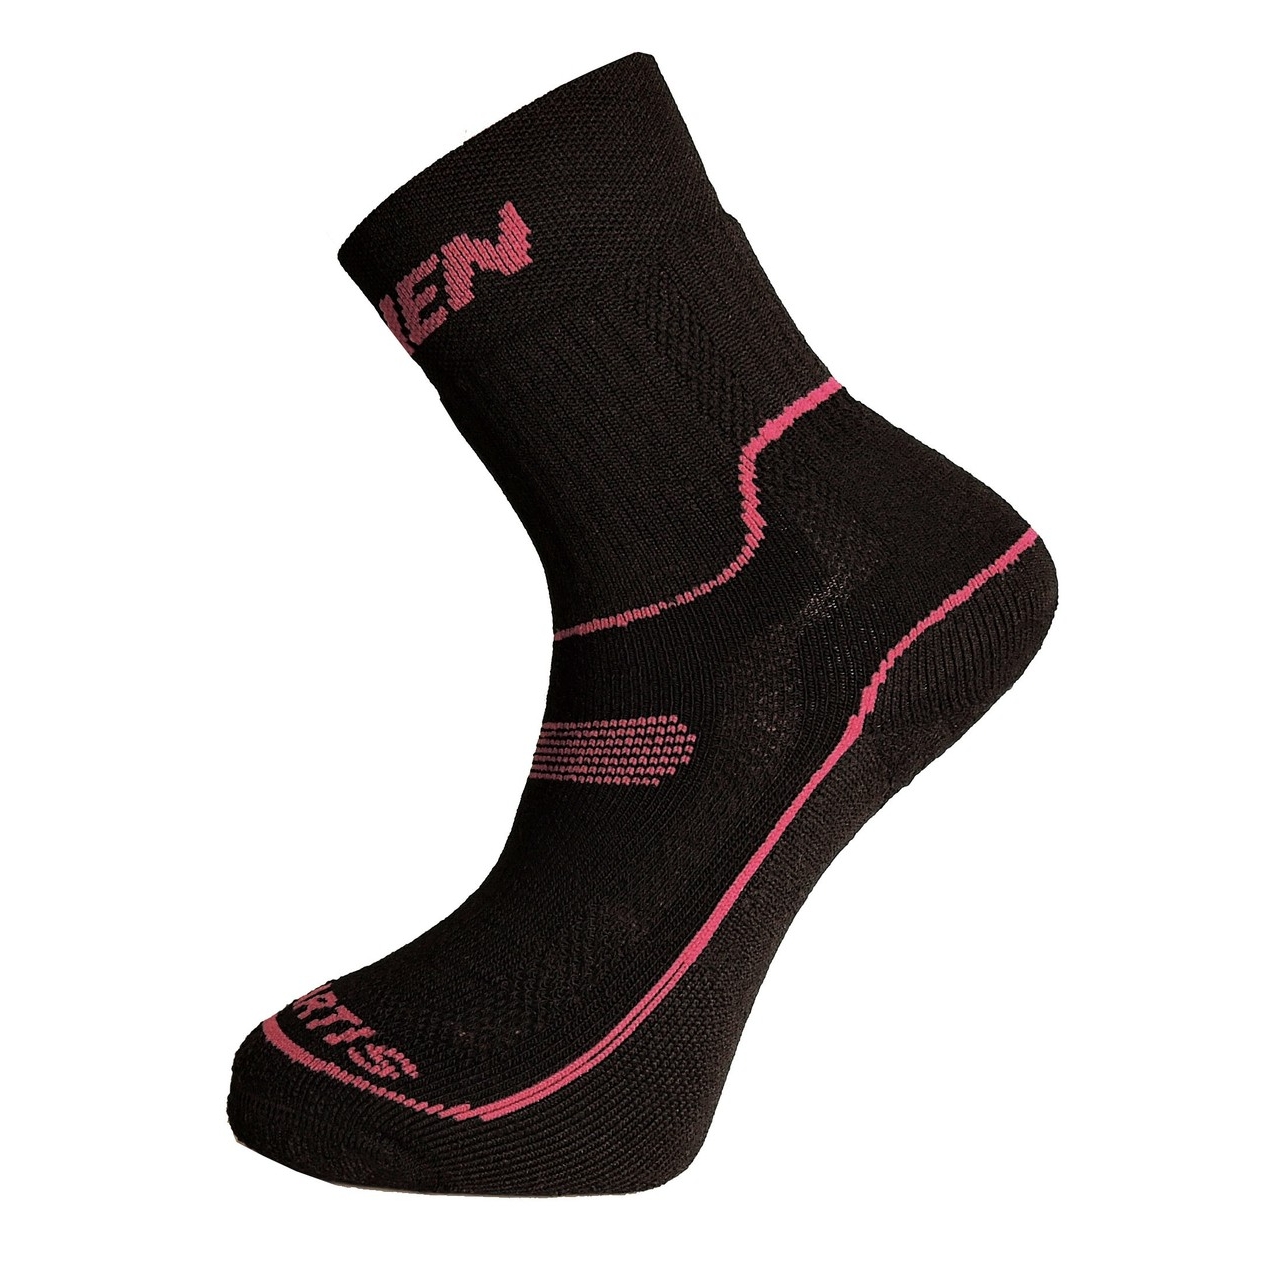 Ponožky Haven Polartis - černé-růžové, 4-5